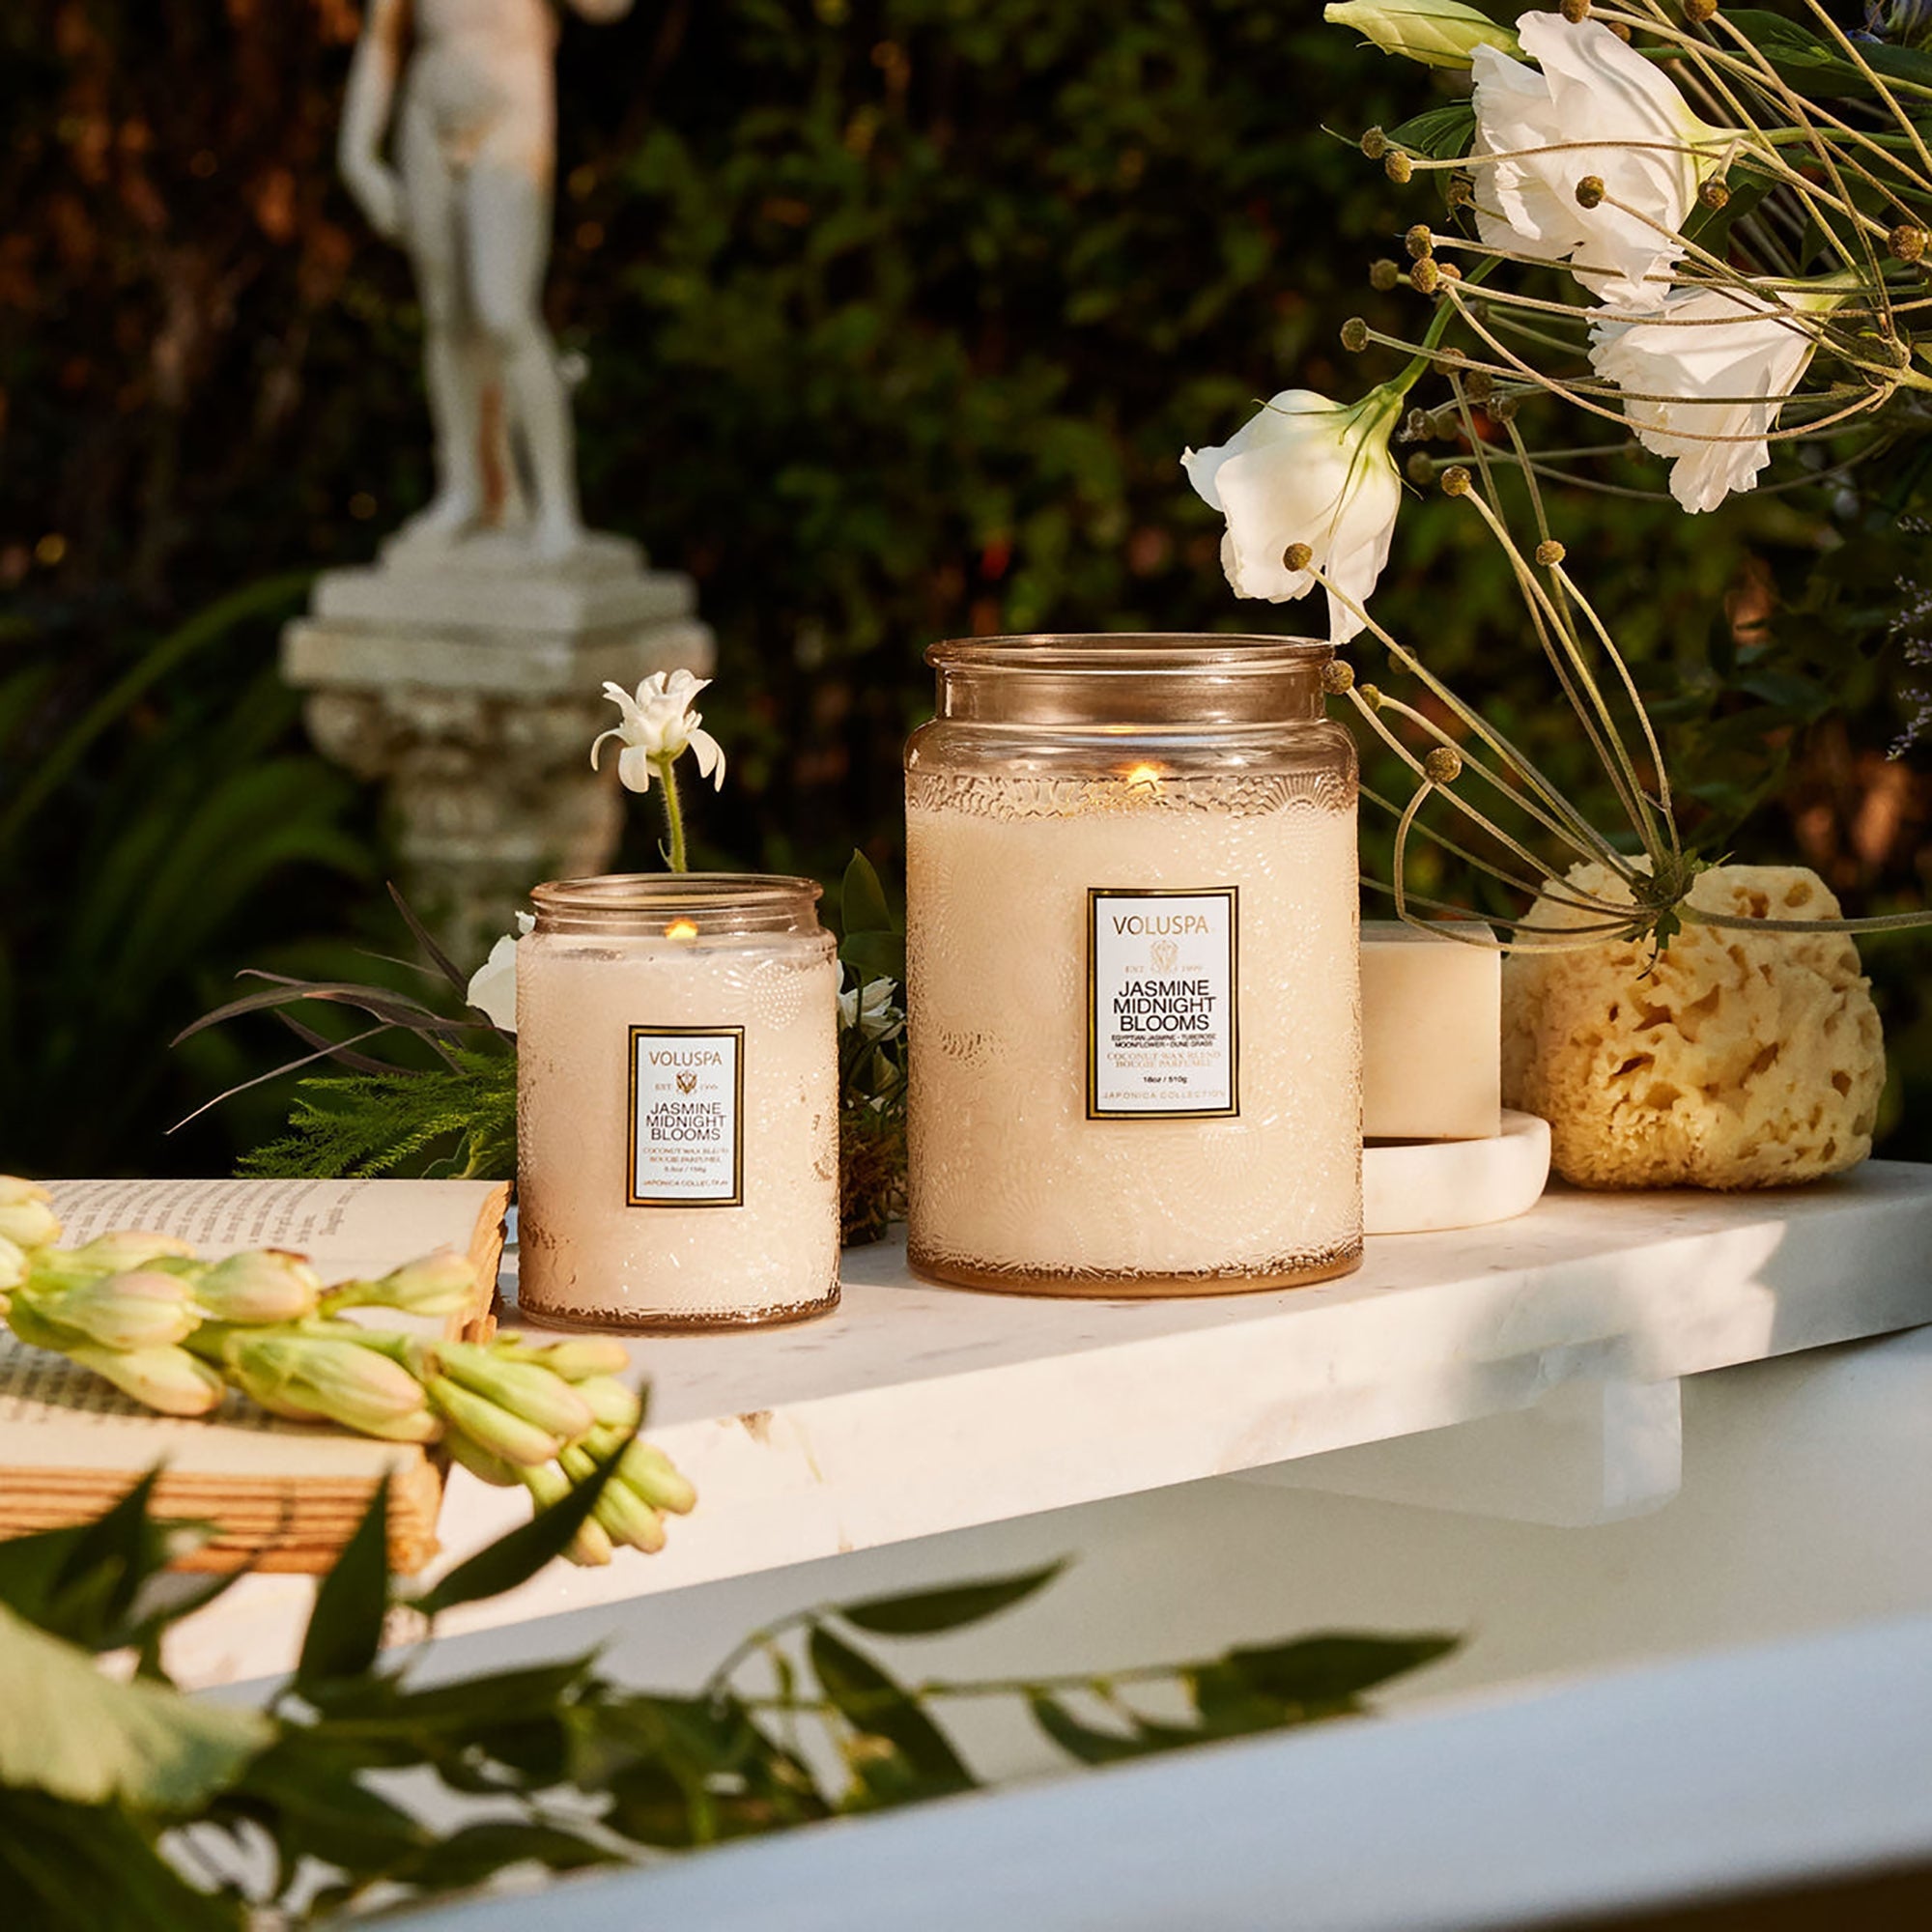 Voluspa Small Jar Candle / Jasmine Midnight Blooms